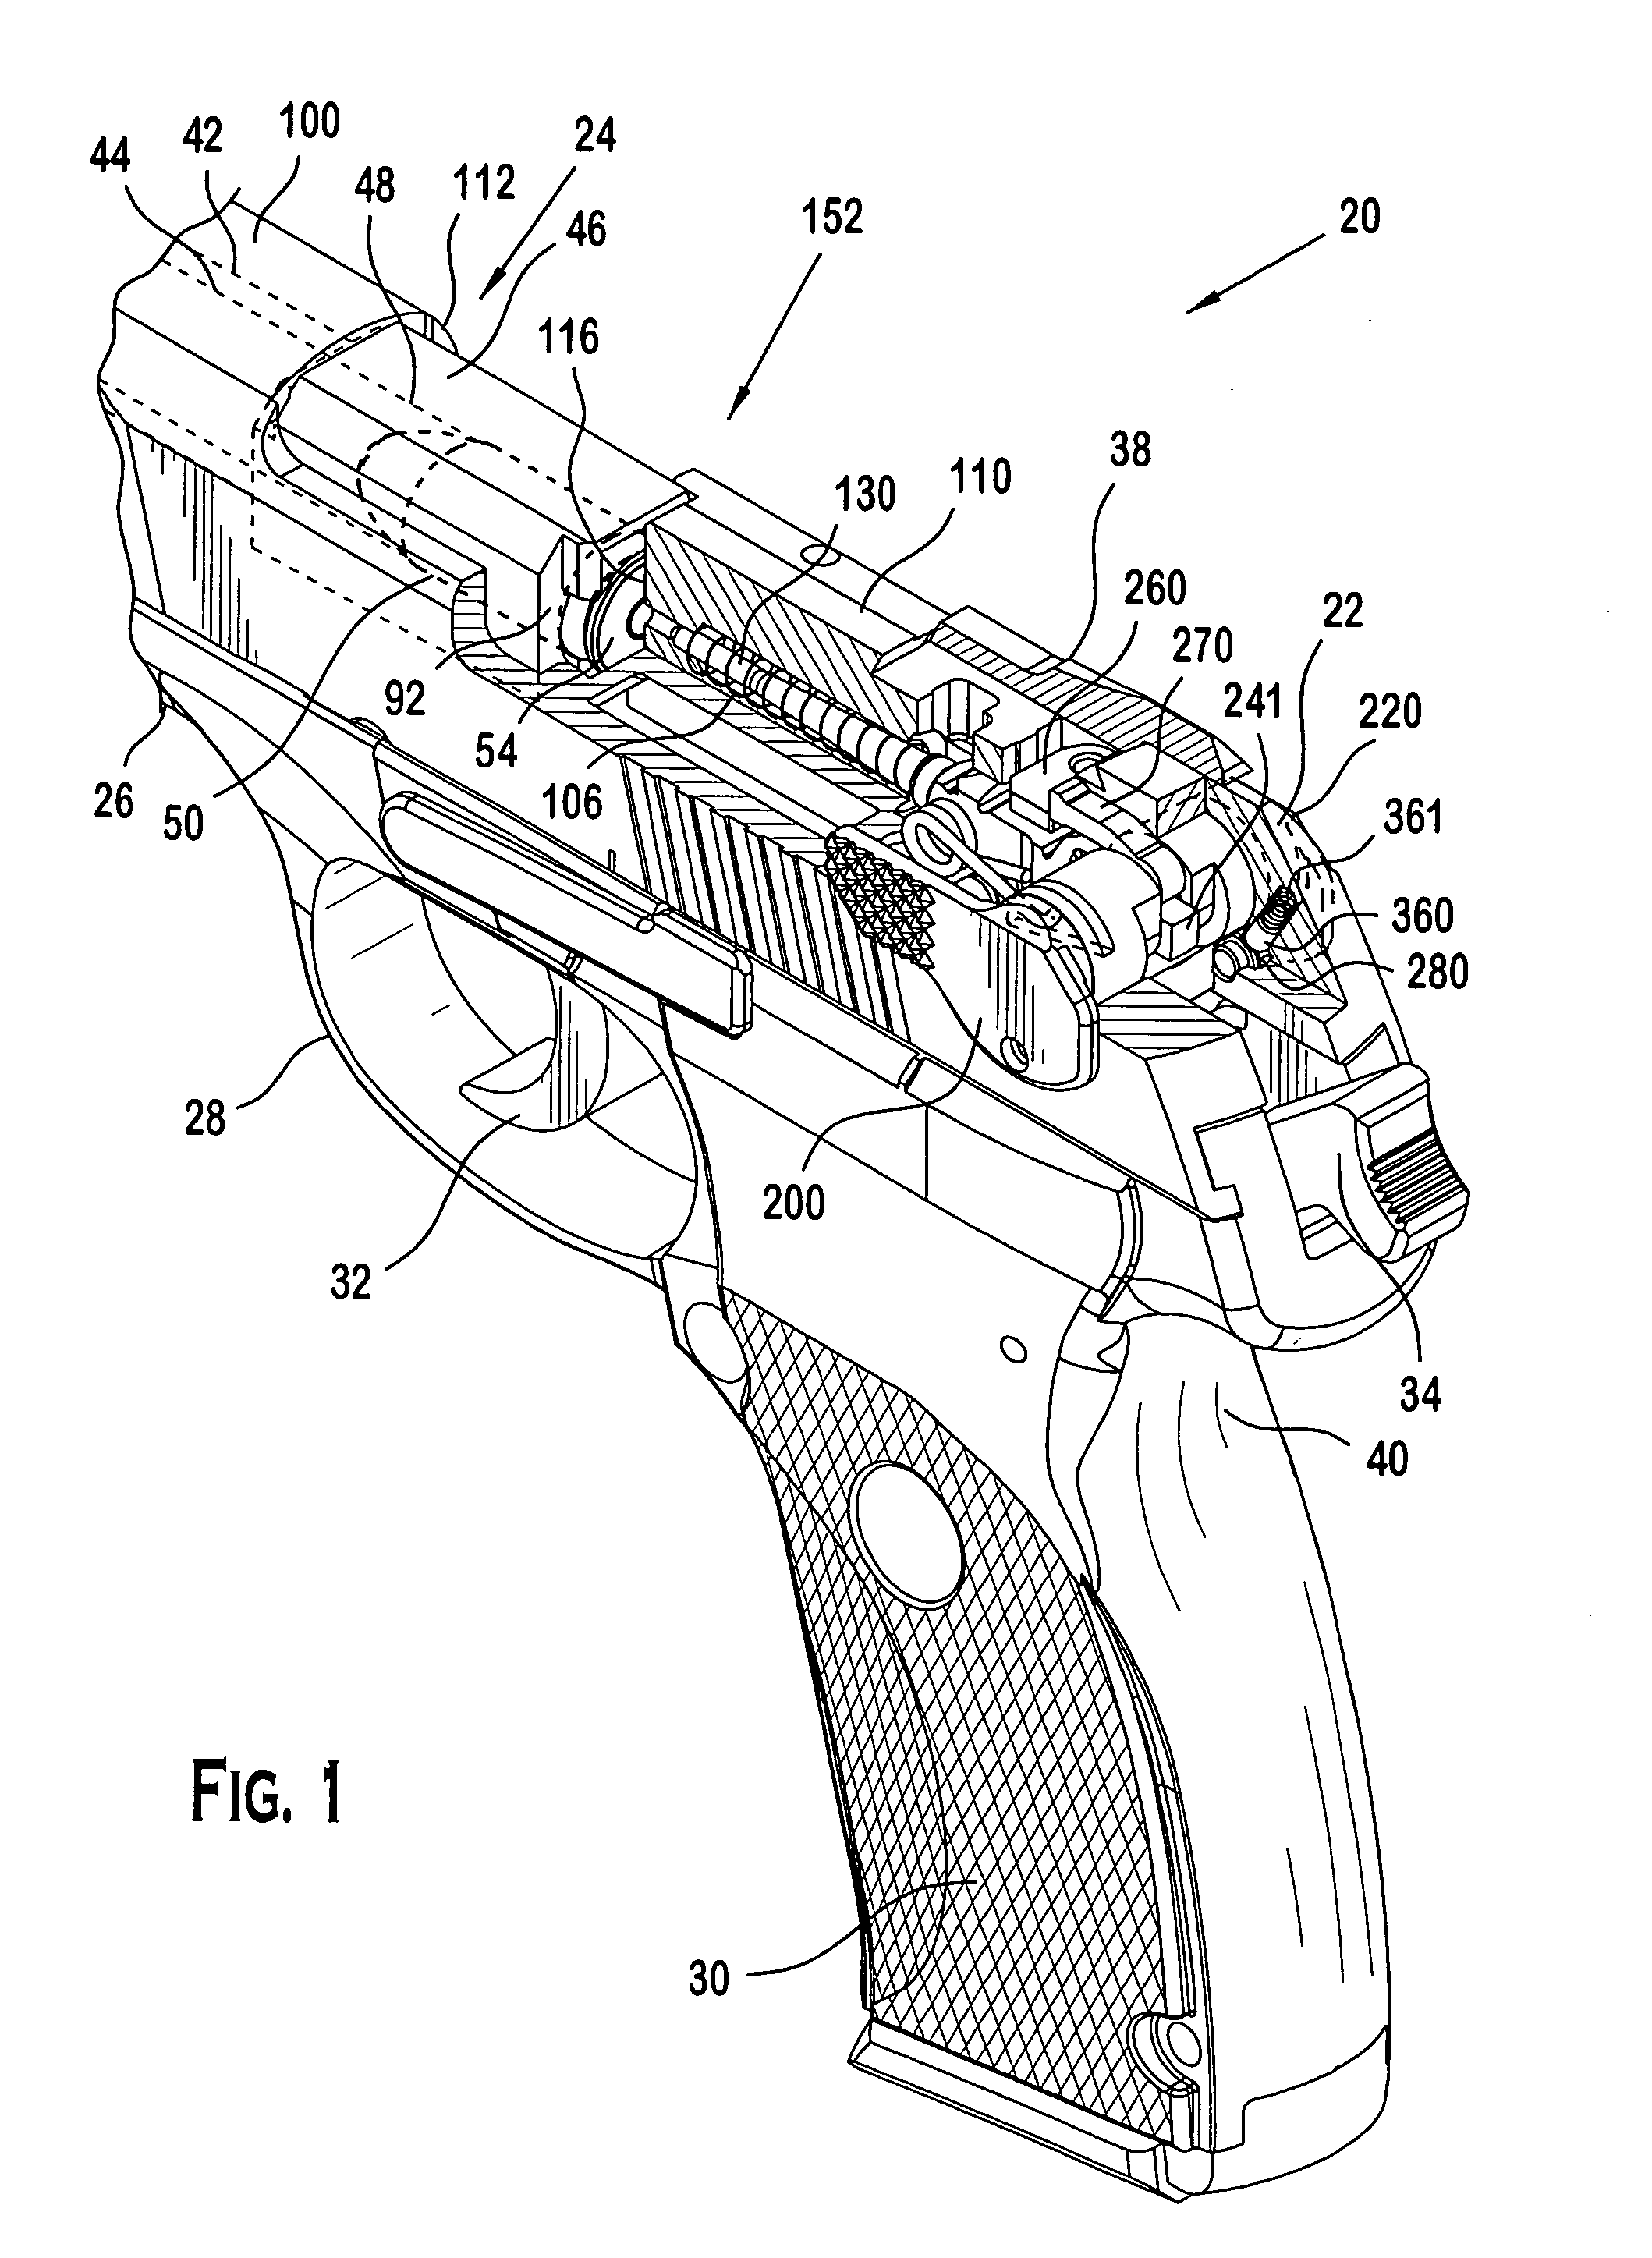 Pistol with firing pin locking mechanism